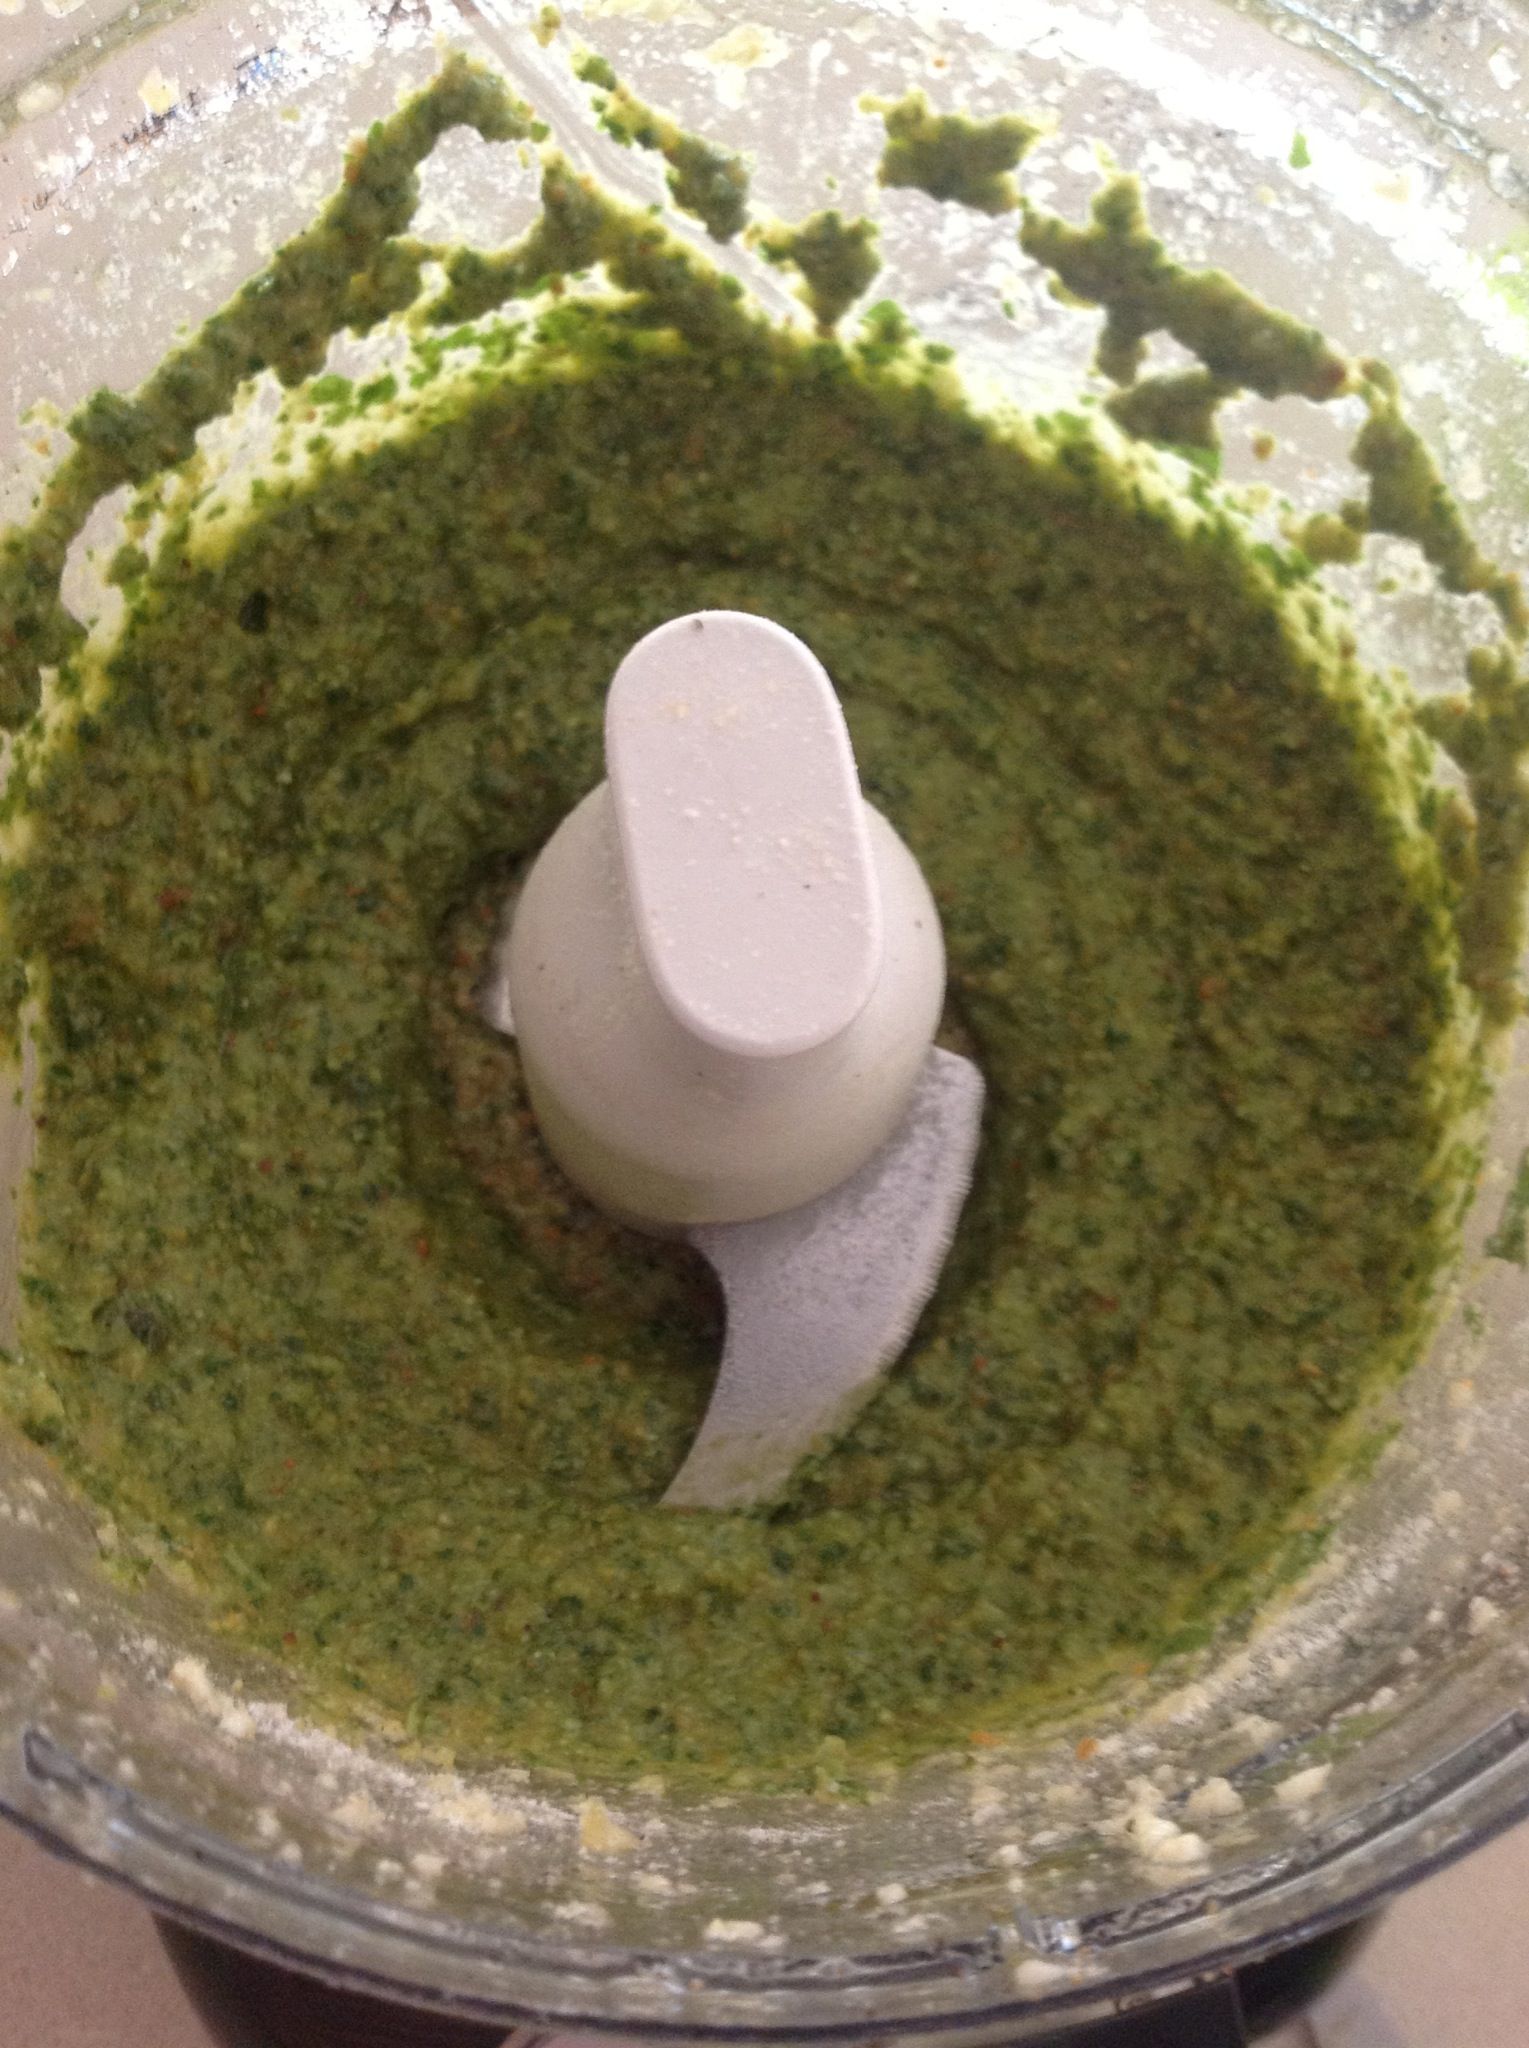 How to Make Homemade Pesto Sauce